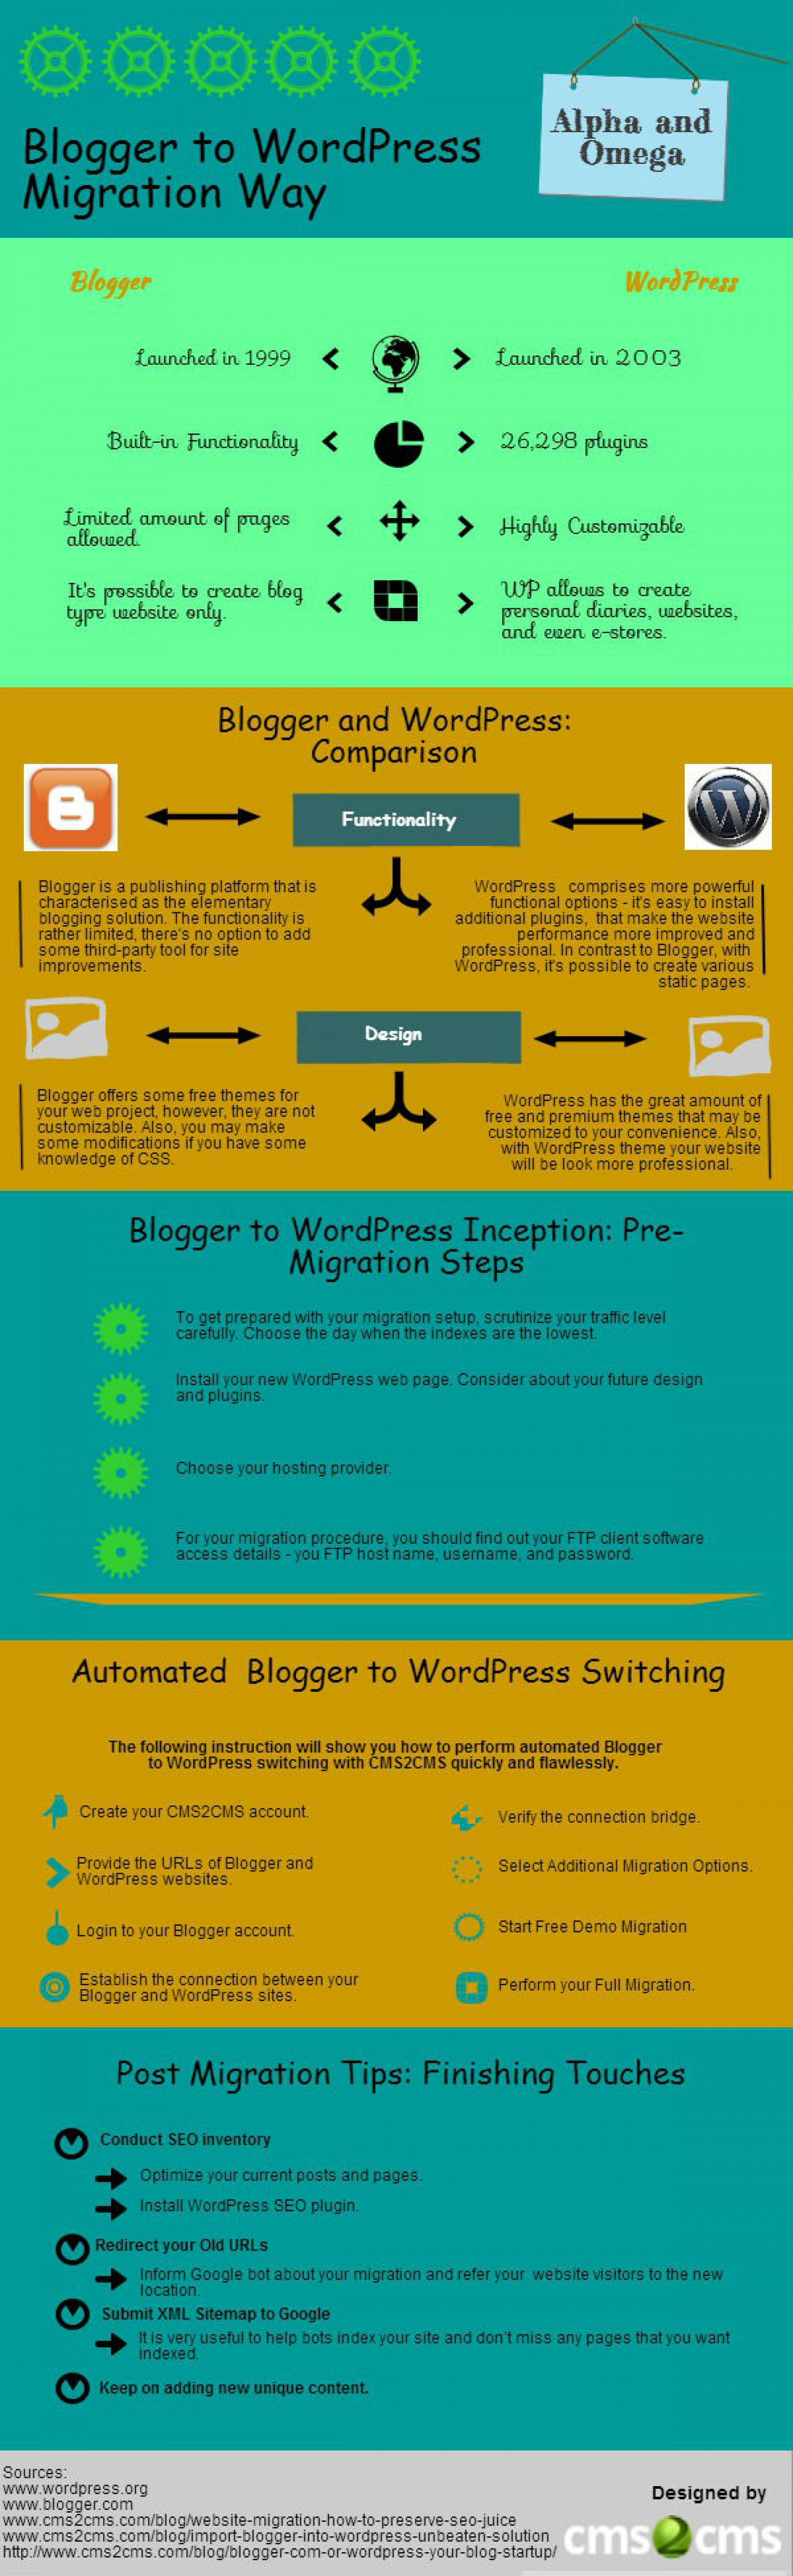 Alpha nad Omega: Blogger to WordPress Migration Infographic